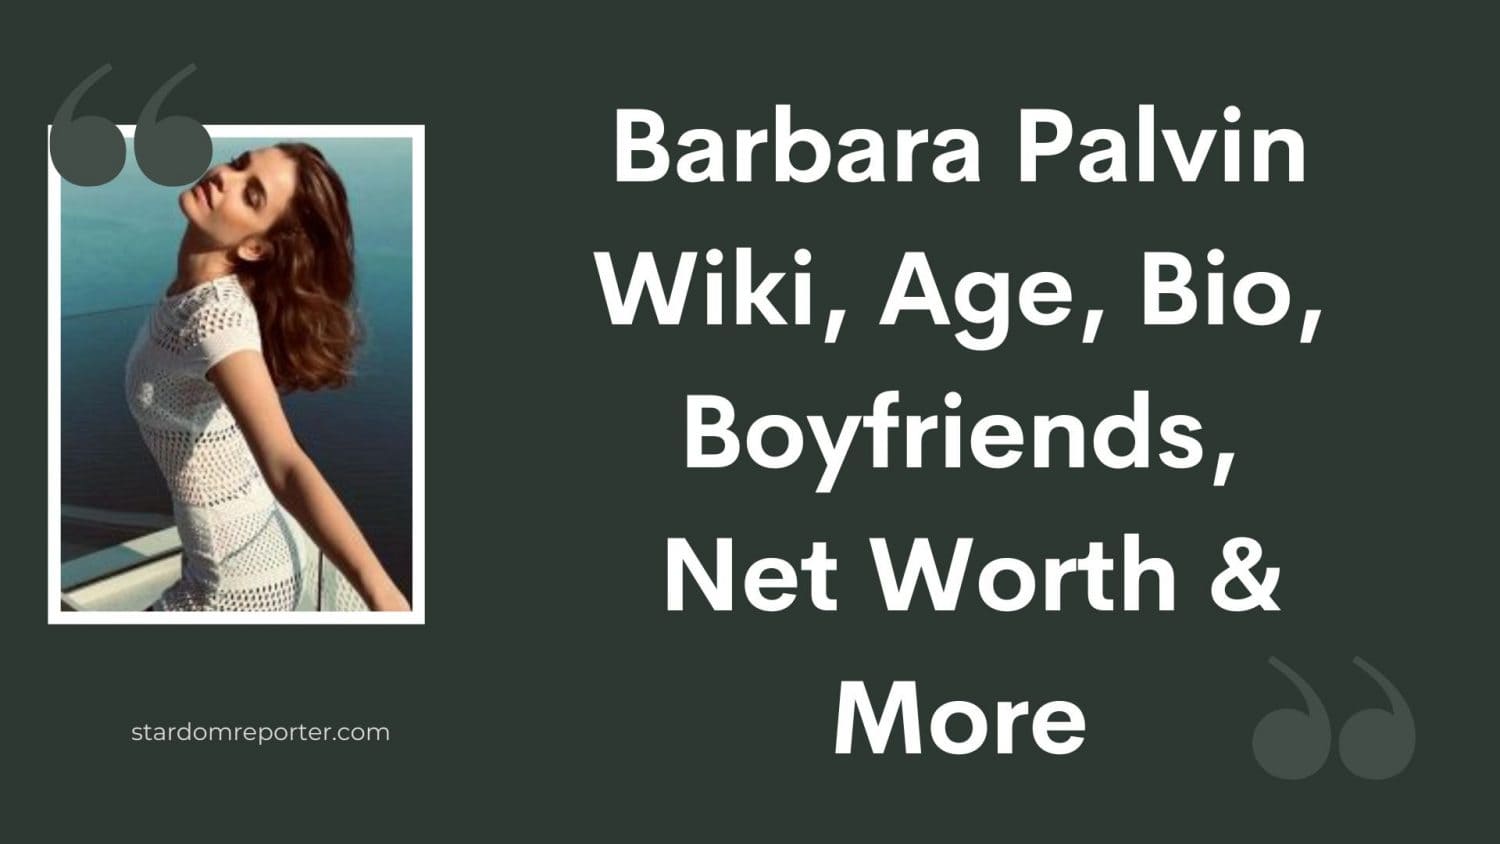 Barbara Palvin Wiki, Age, Bio, Boyfriends, Net Worth & More - 27